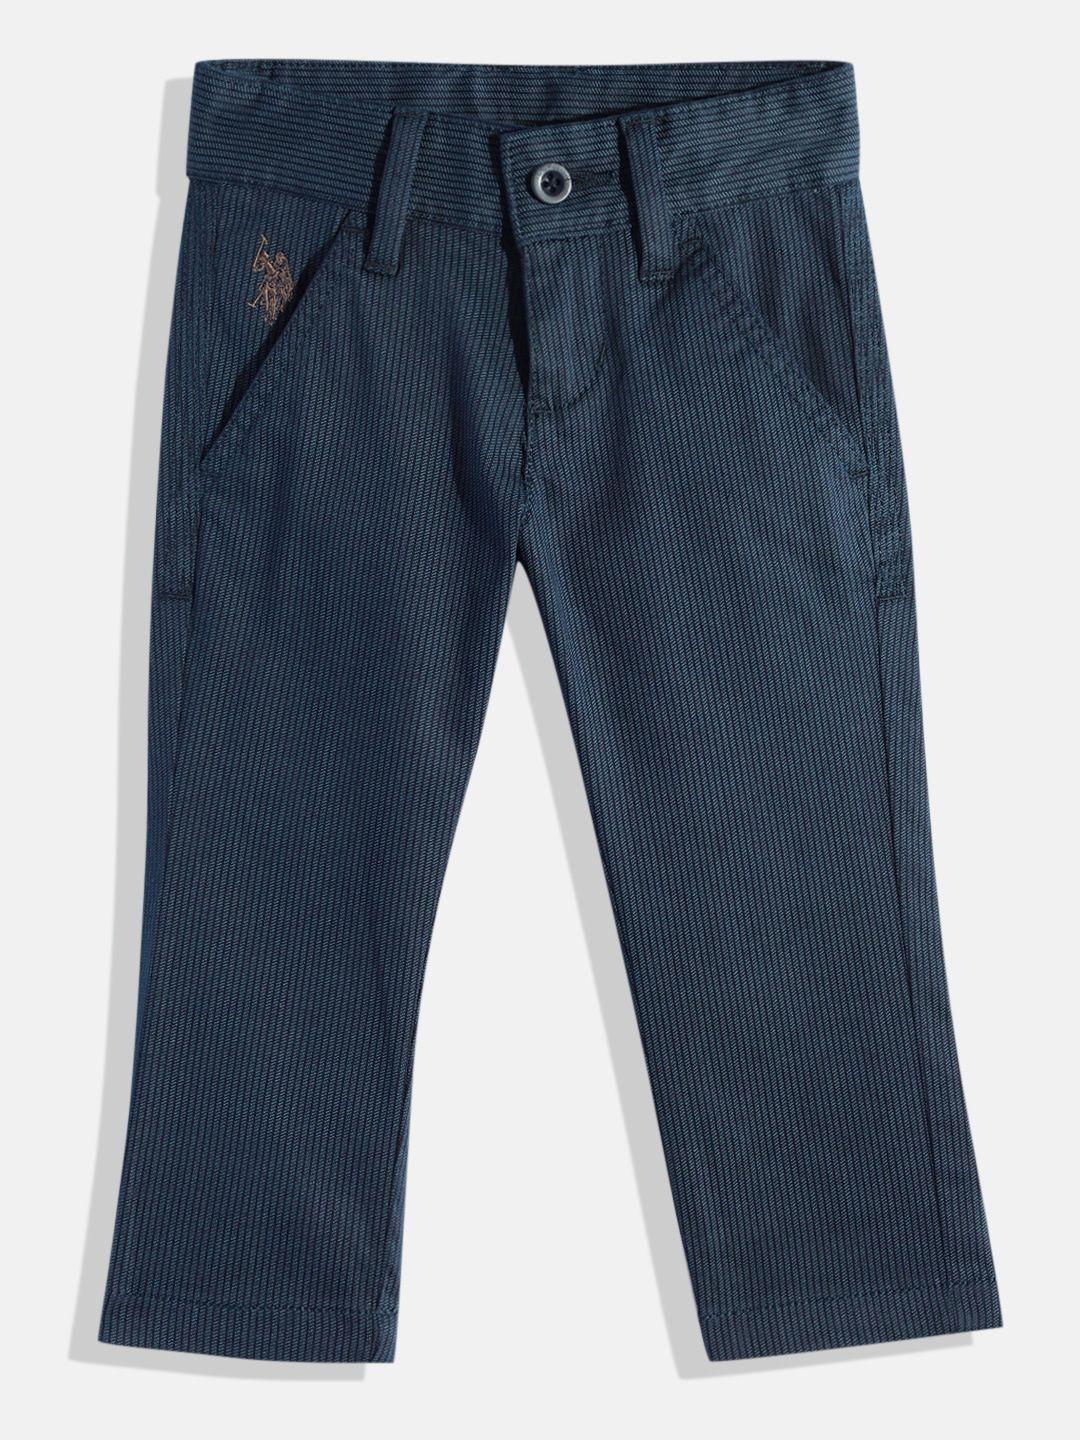 u.s. polo assn. kids boys navy blue self design trousers